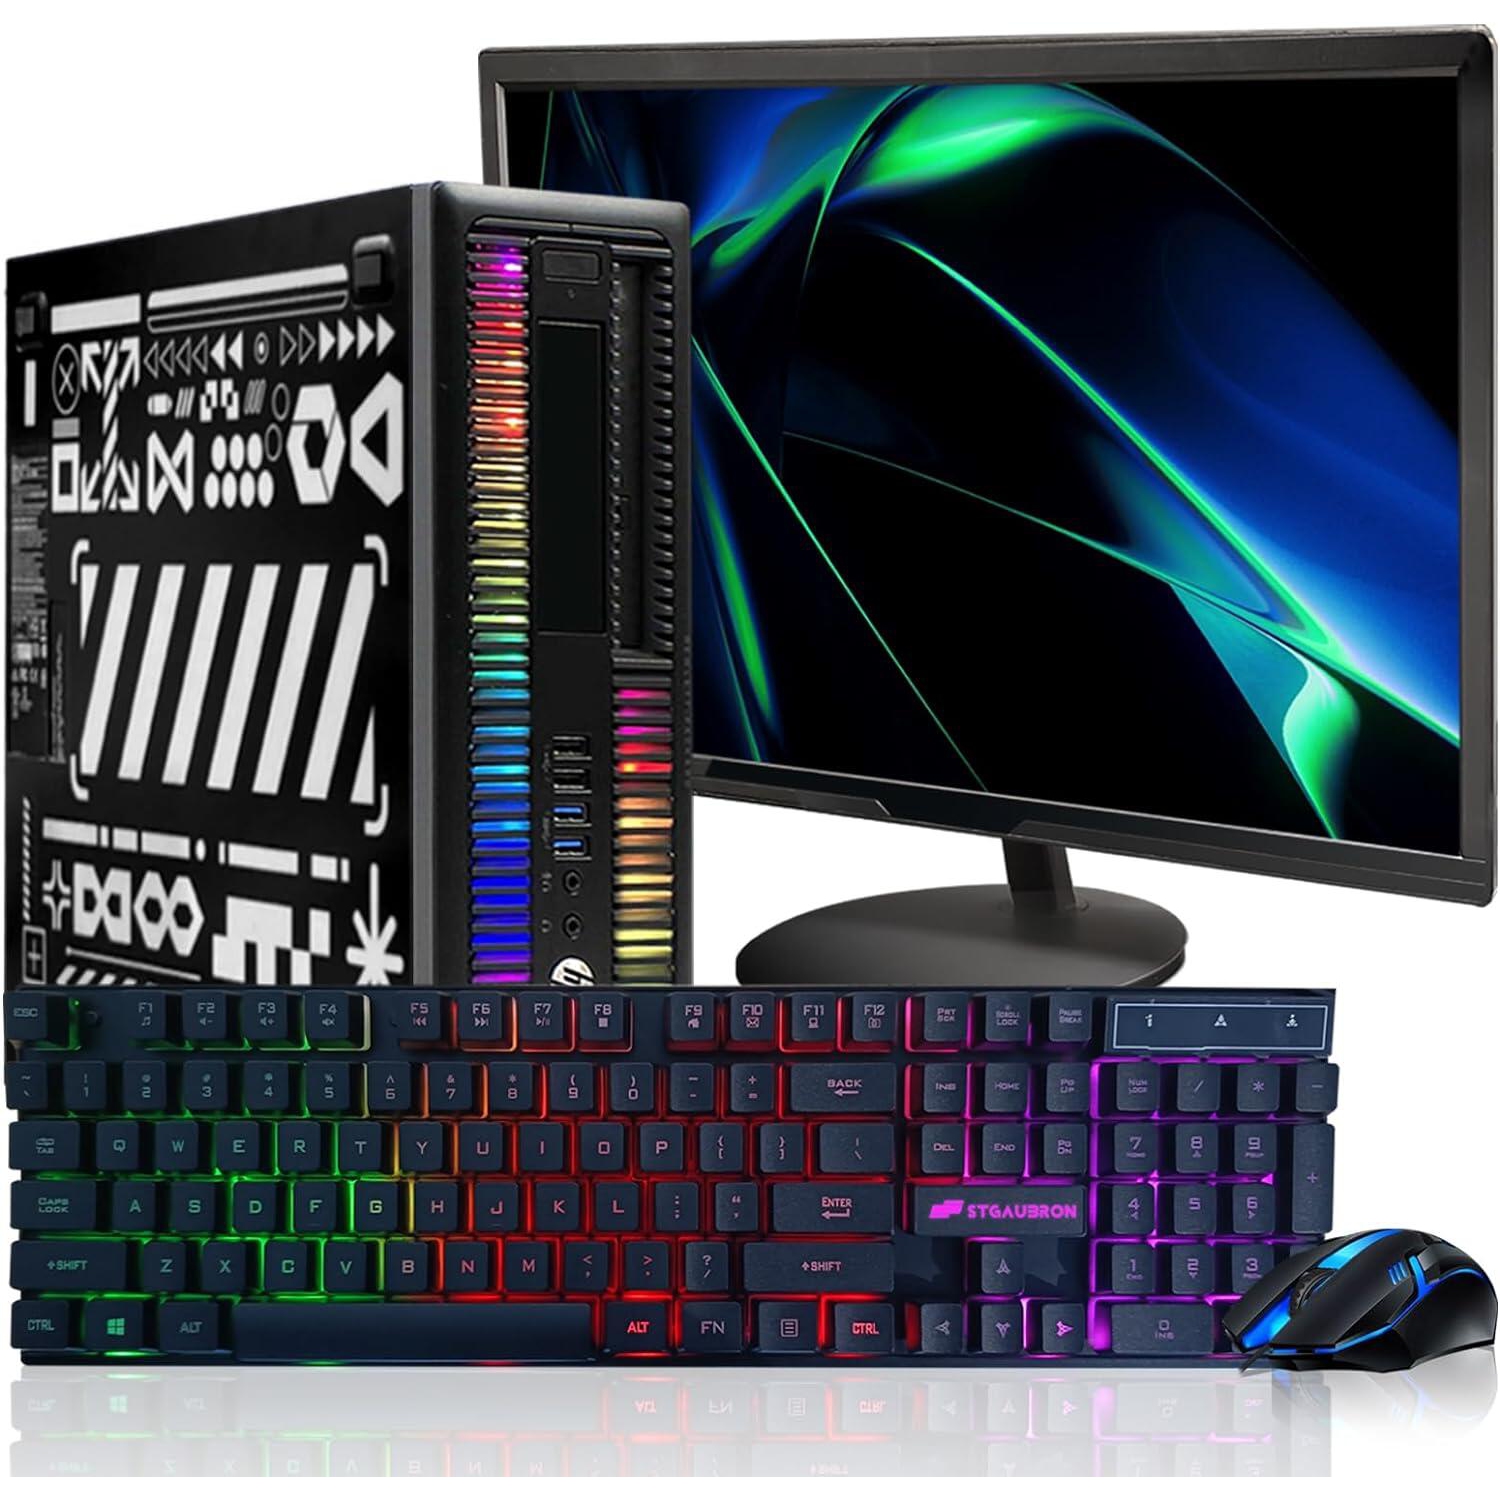 HP RGB Gaming Desktop Computer, Intel Core I7 3.4G up to 3.9GHz, GeForce GTX 1050 Ti 4G, 32GB, 2T SSD, New 24" FHD LED, RGB KB&MS, 600M WiFi&BT 5.0, W10P64 -Refurbished Excellent